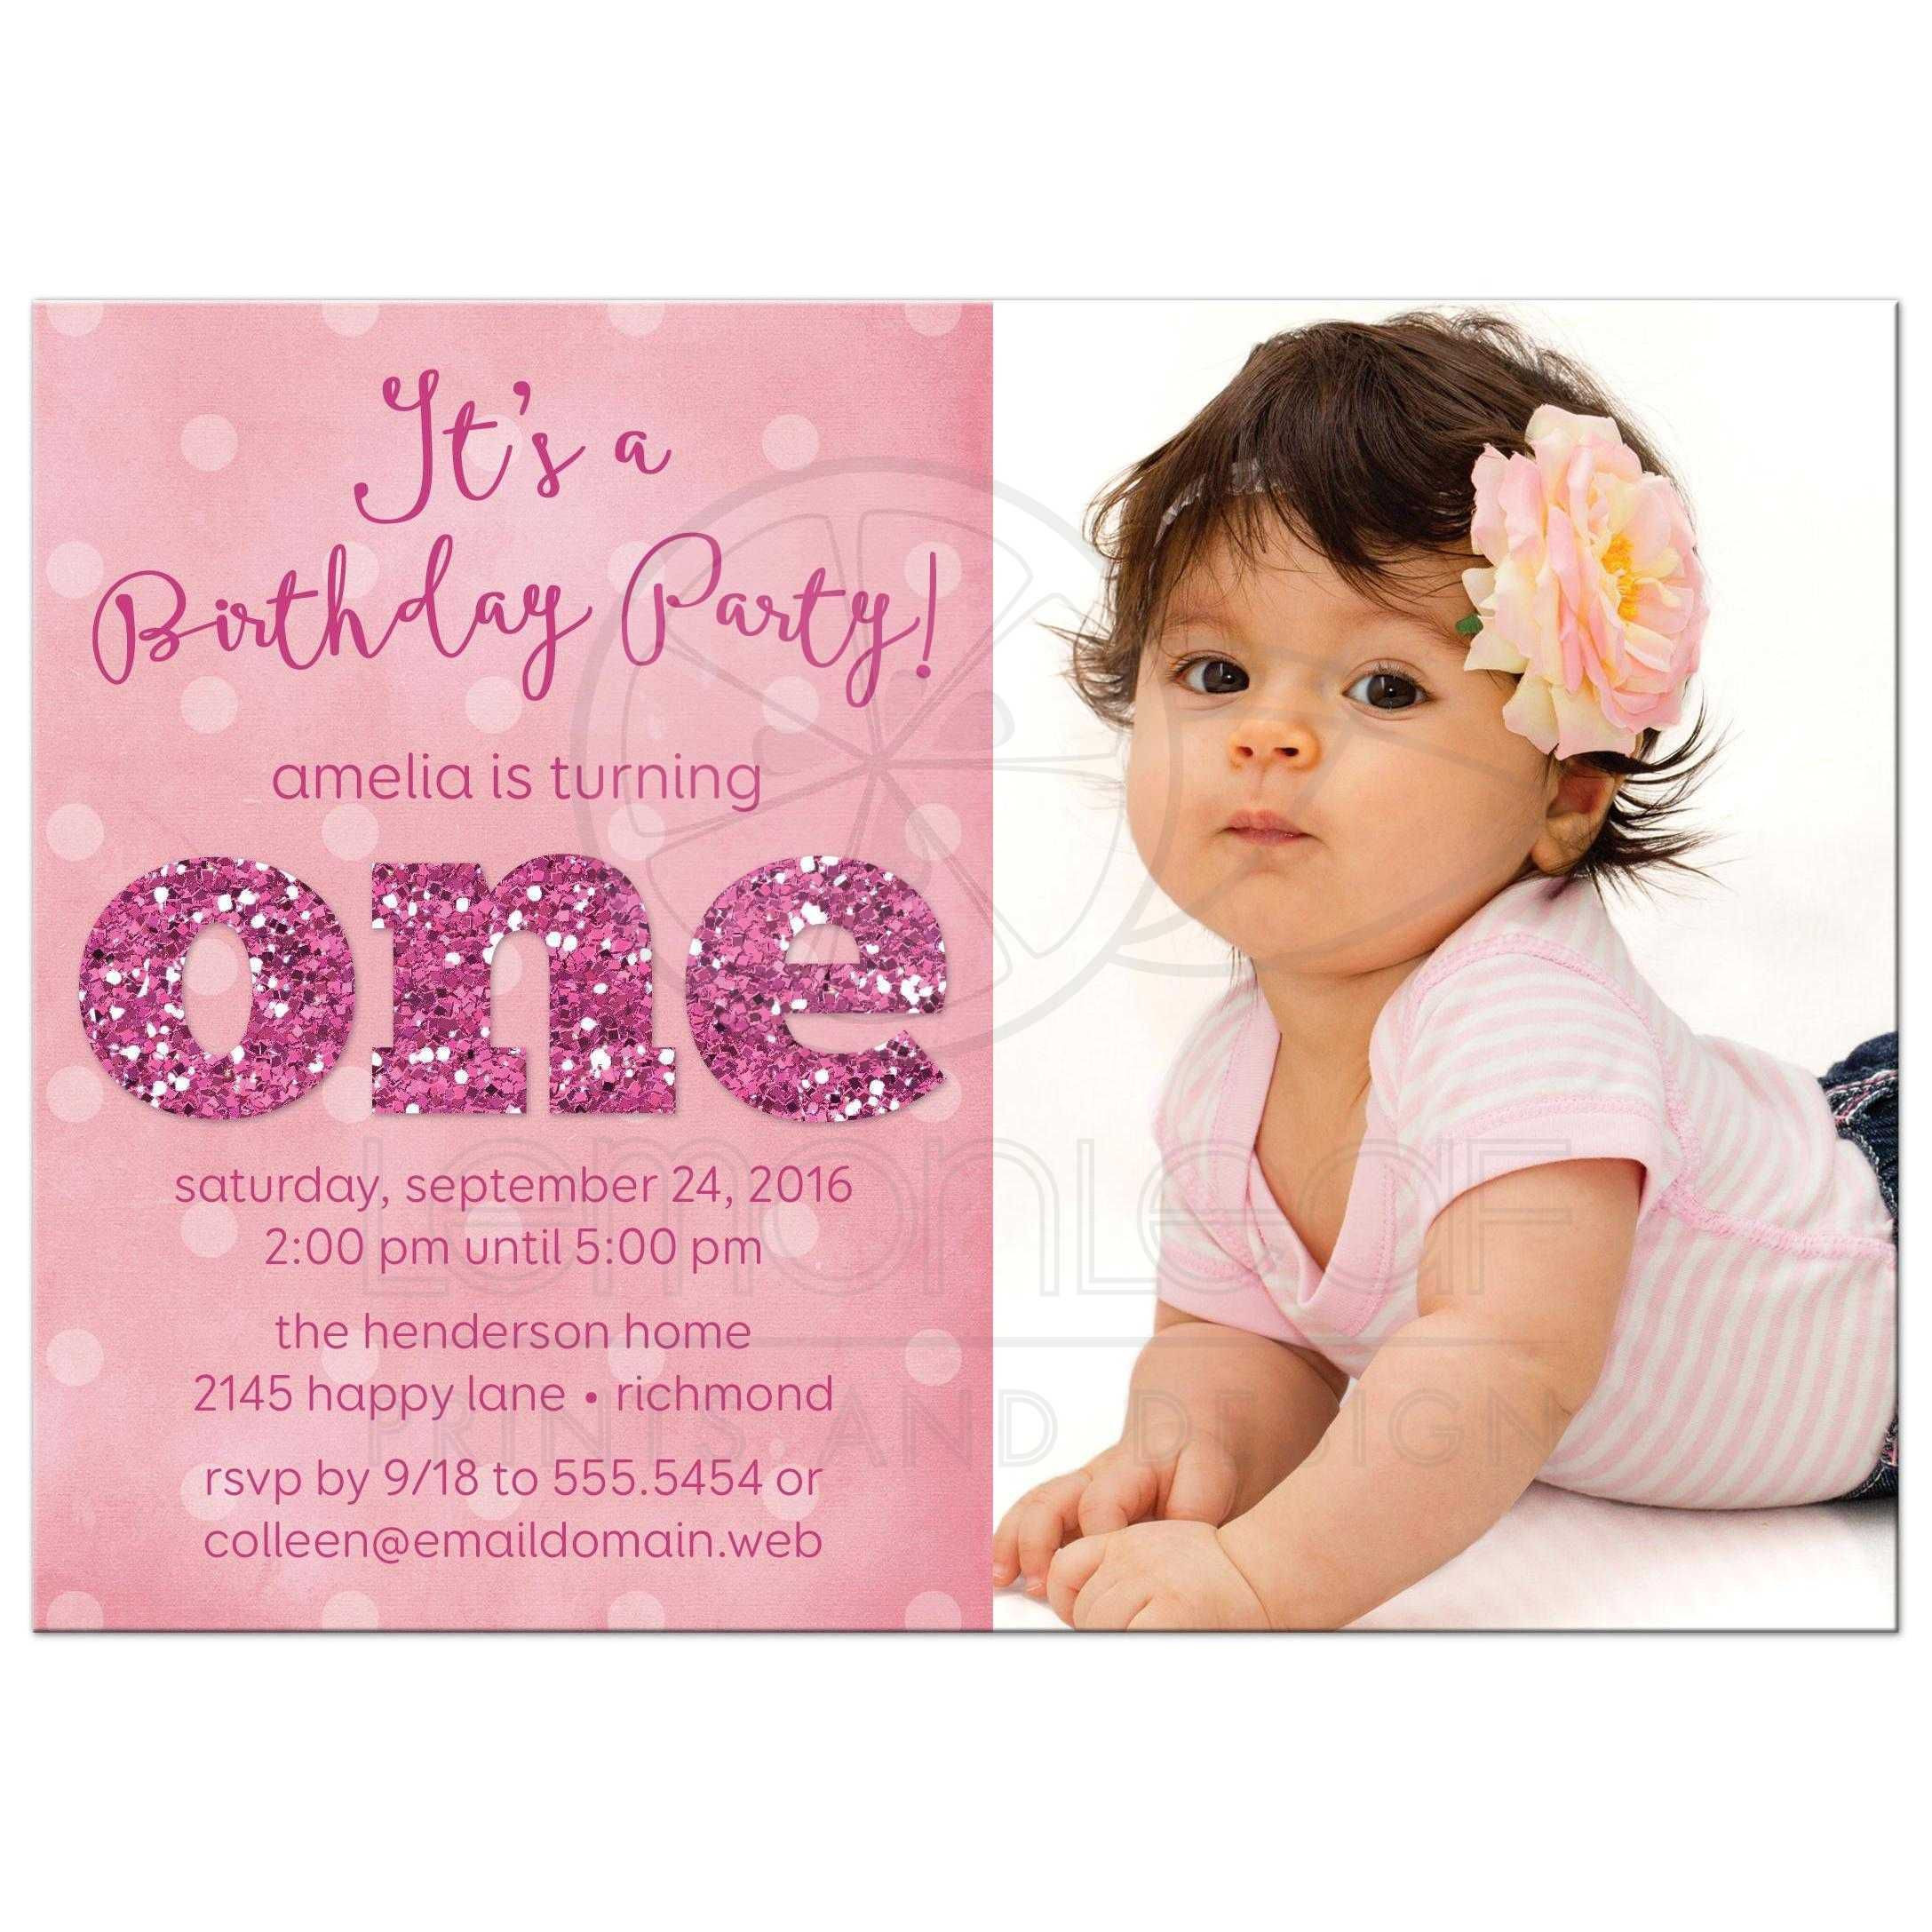 1st Birthday Party Invitation Wording
 1st birthday and christening invitation wording